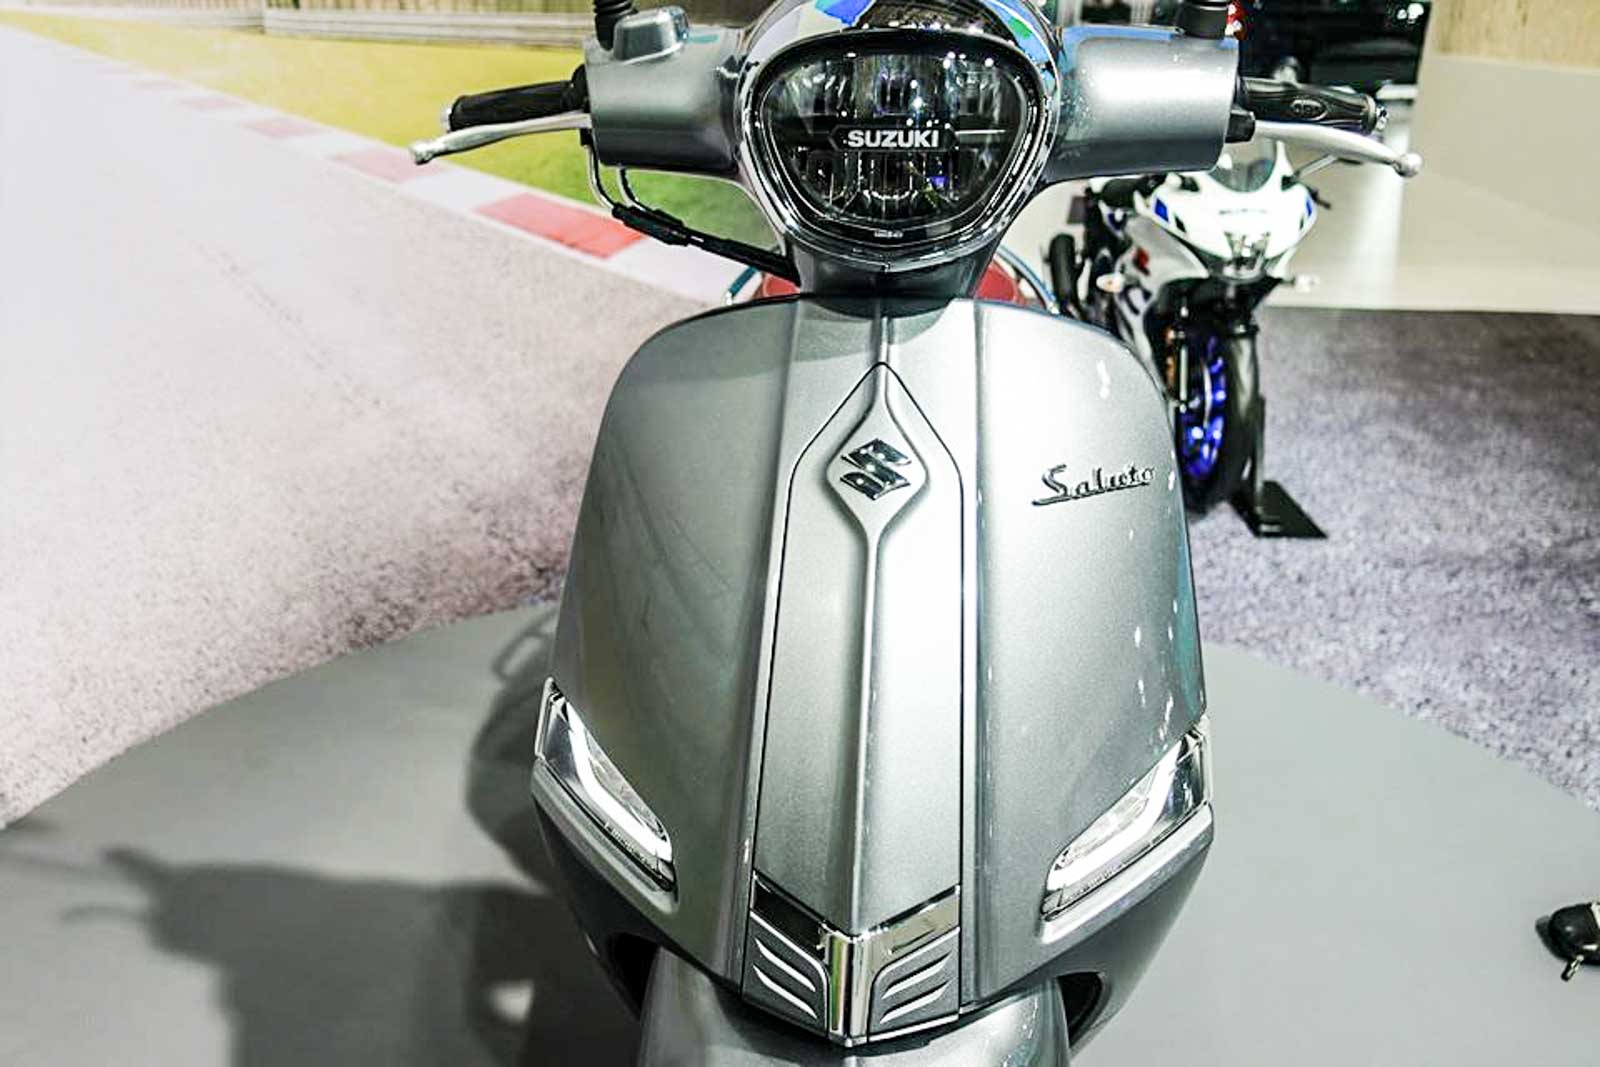 Suzuki Saluto scooter